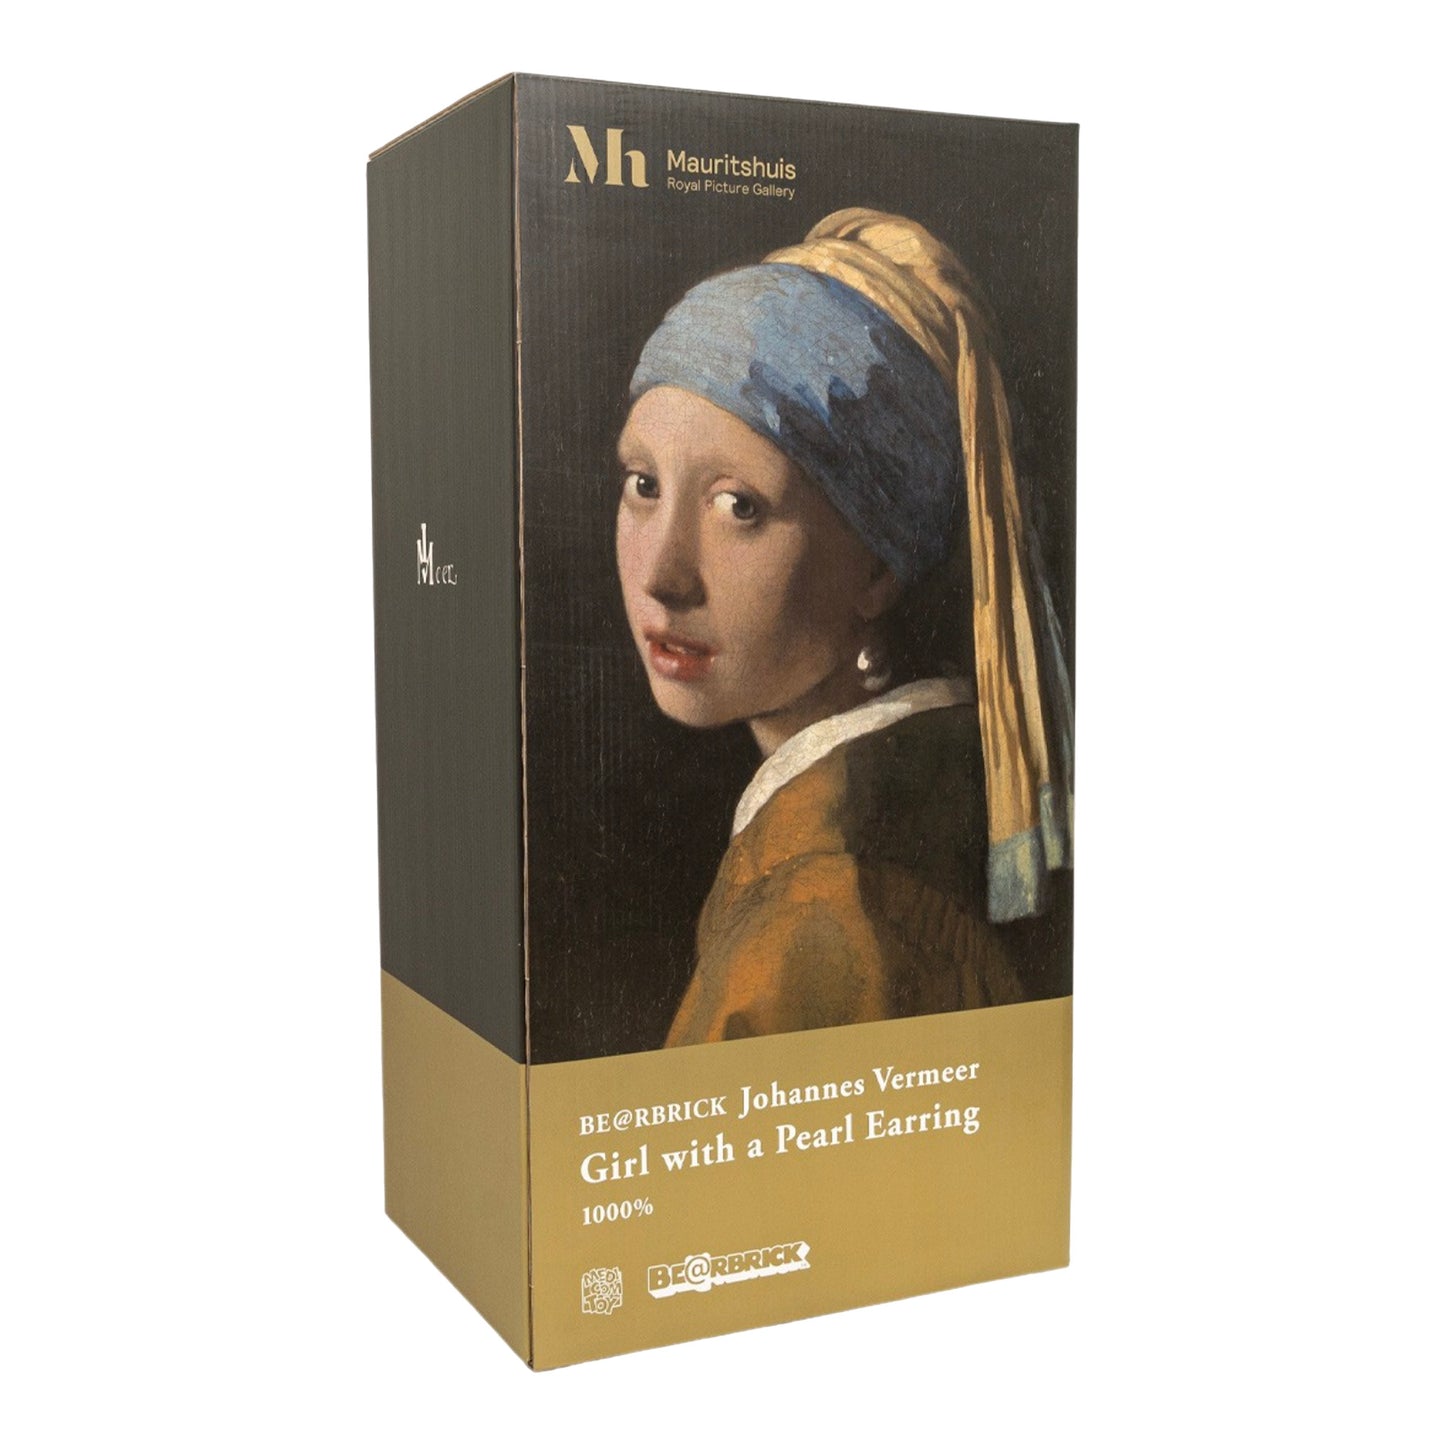 MEDICOM TOY: BE@RBRICK - Johannes Vermeer Girl with a Pearl Earring 1000%